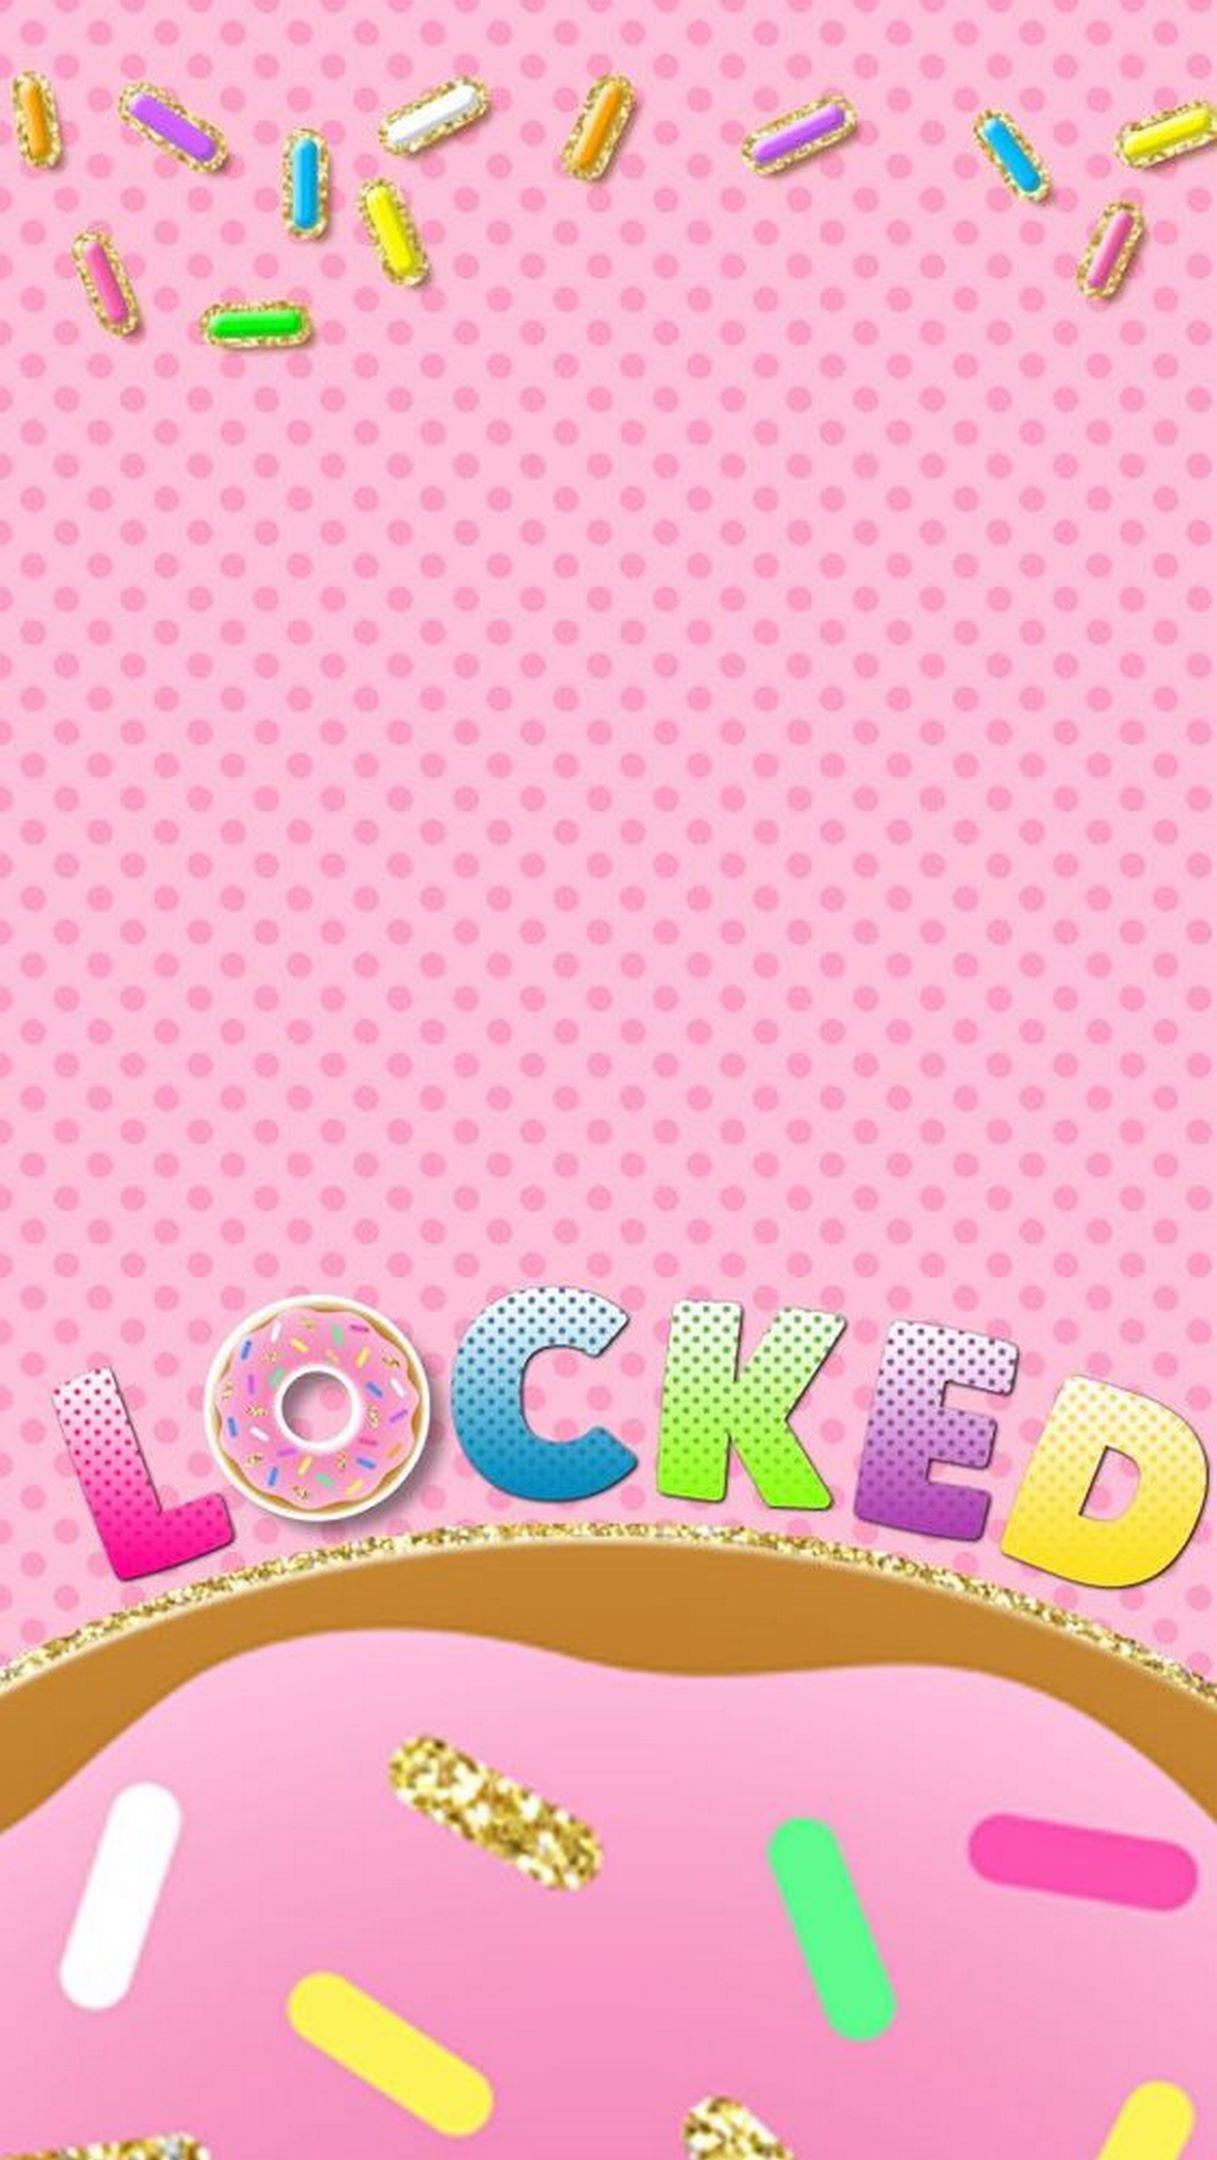 Lock Screen Background Hd Wallpaper 065 - Lock Screen Pink Polka Dot Iphone  - 1217x2160 Wallpaper 